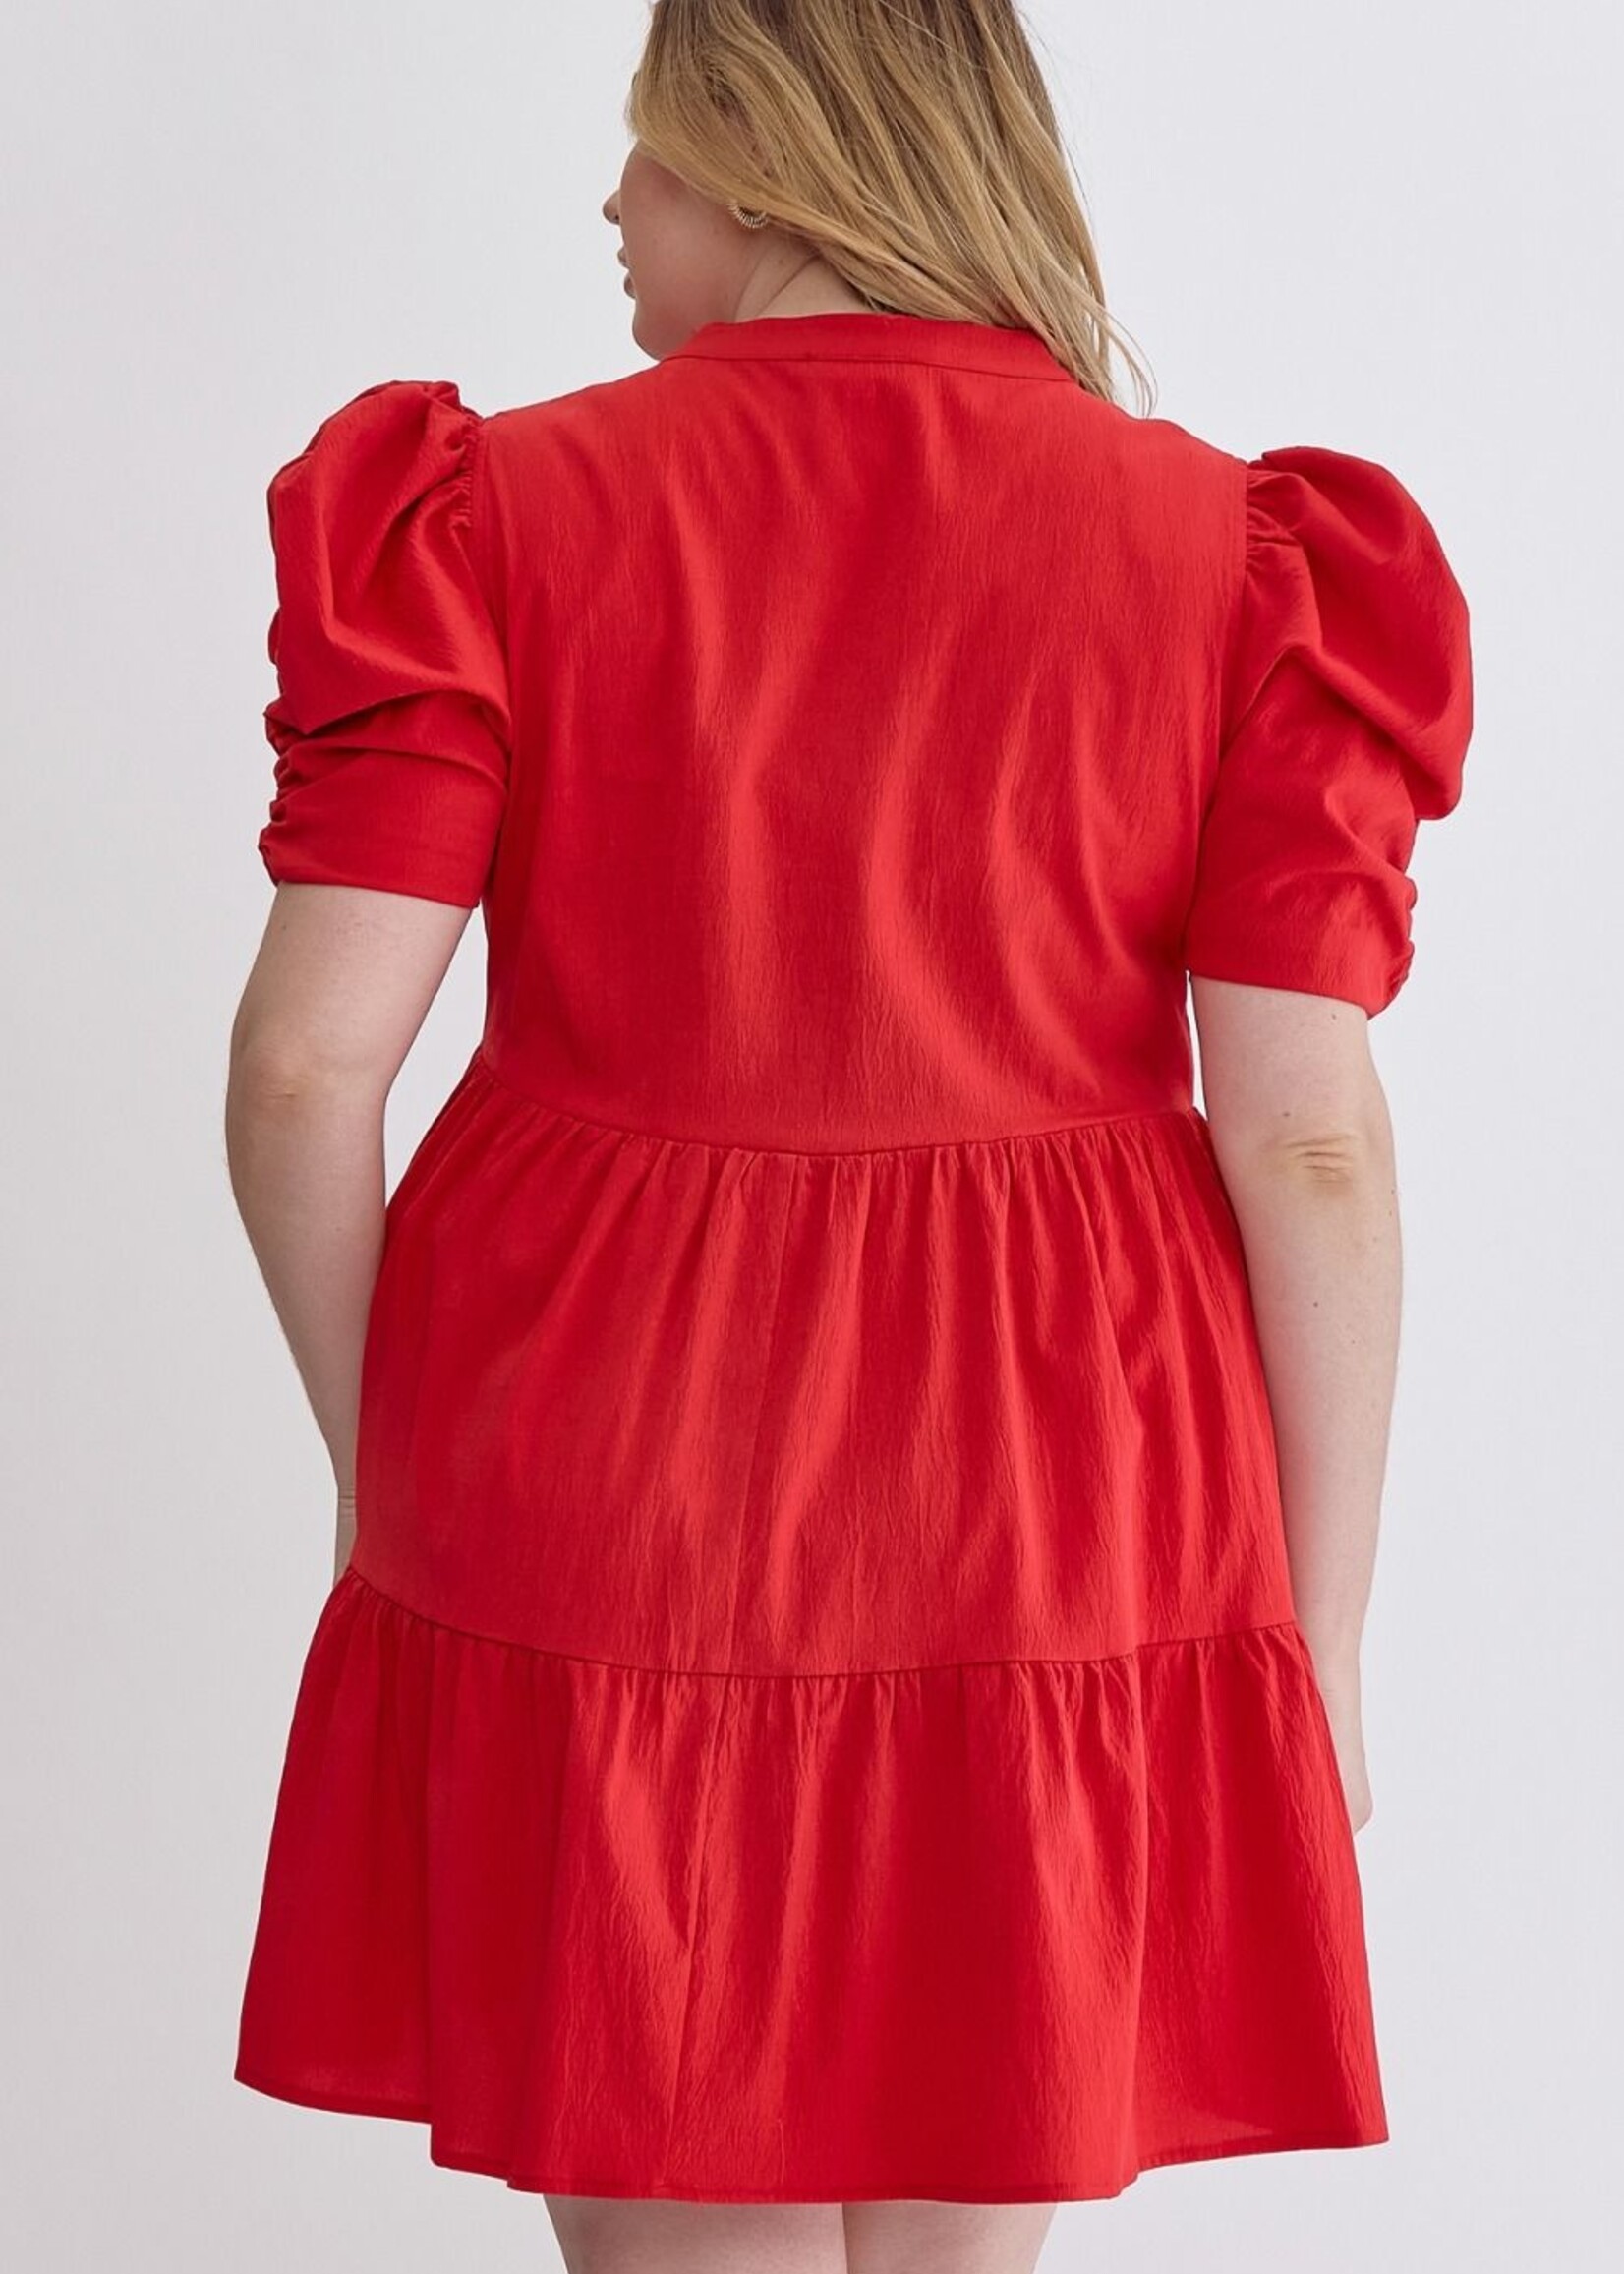 Marlee Mini Dress - Red